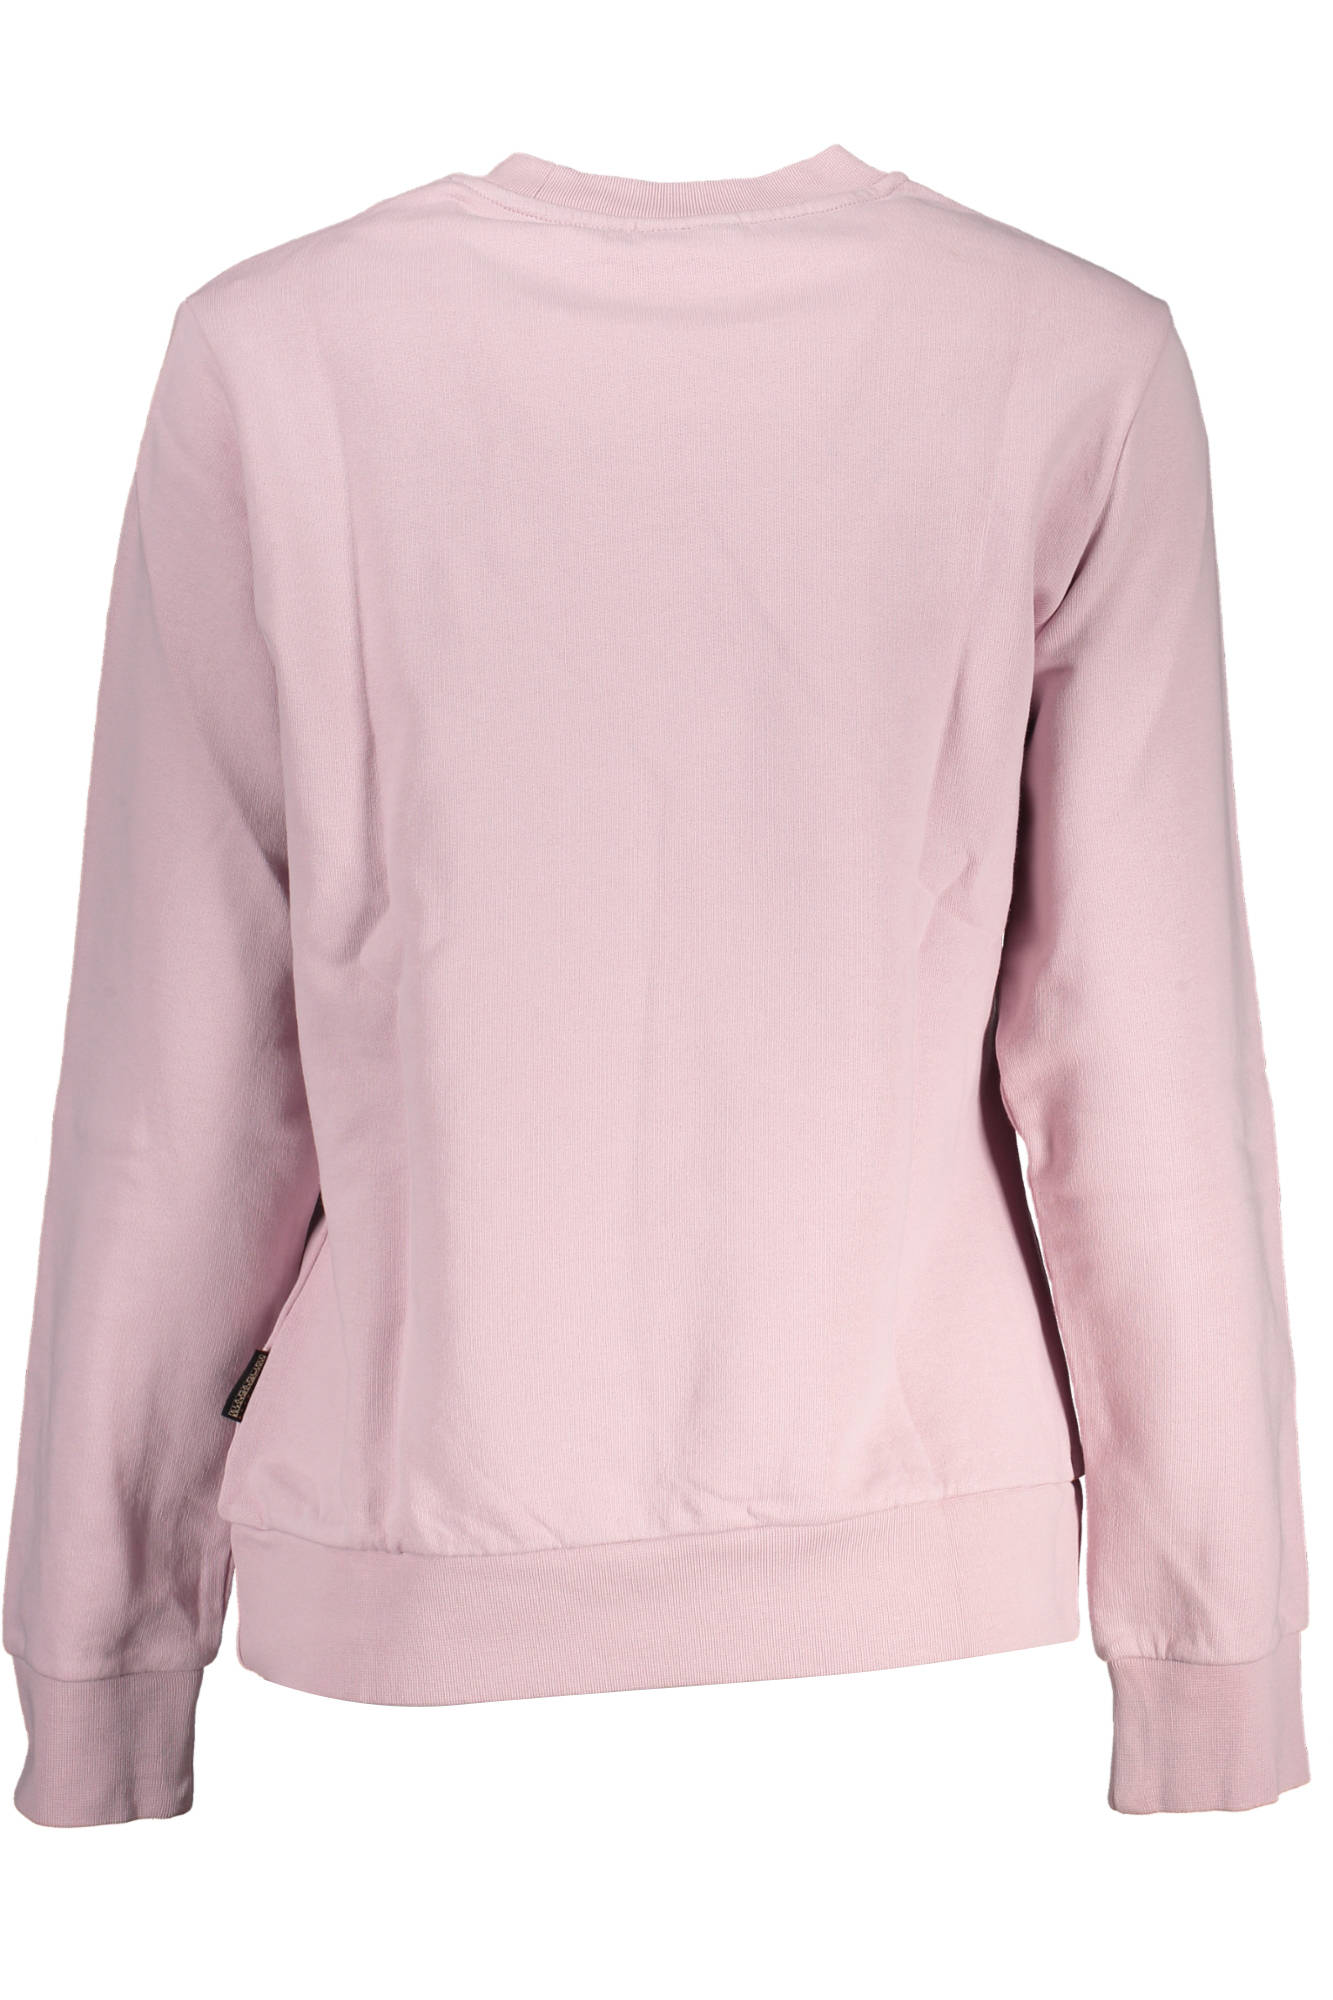 Napapijri Pink Cotton Sweater - Fizigo